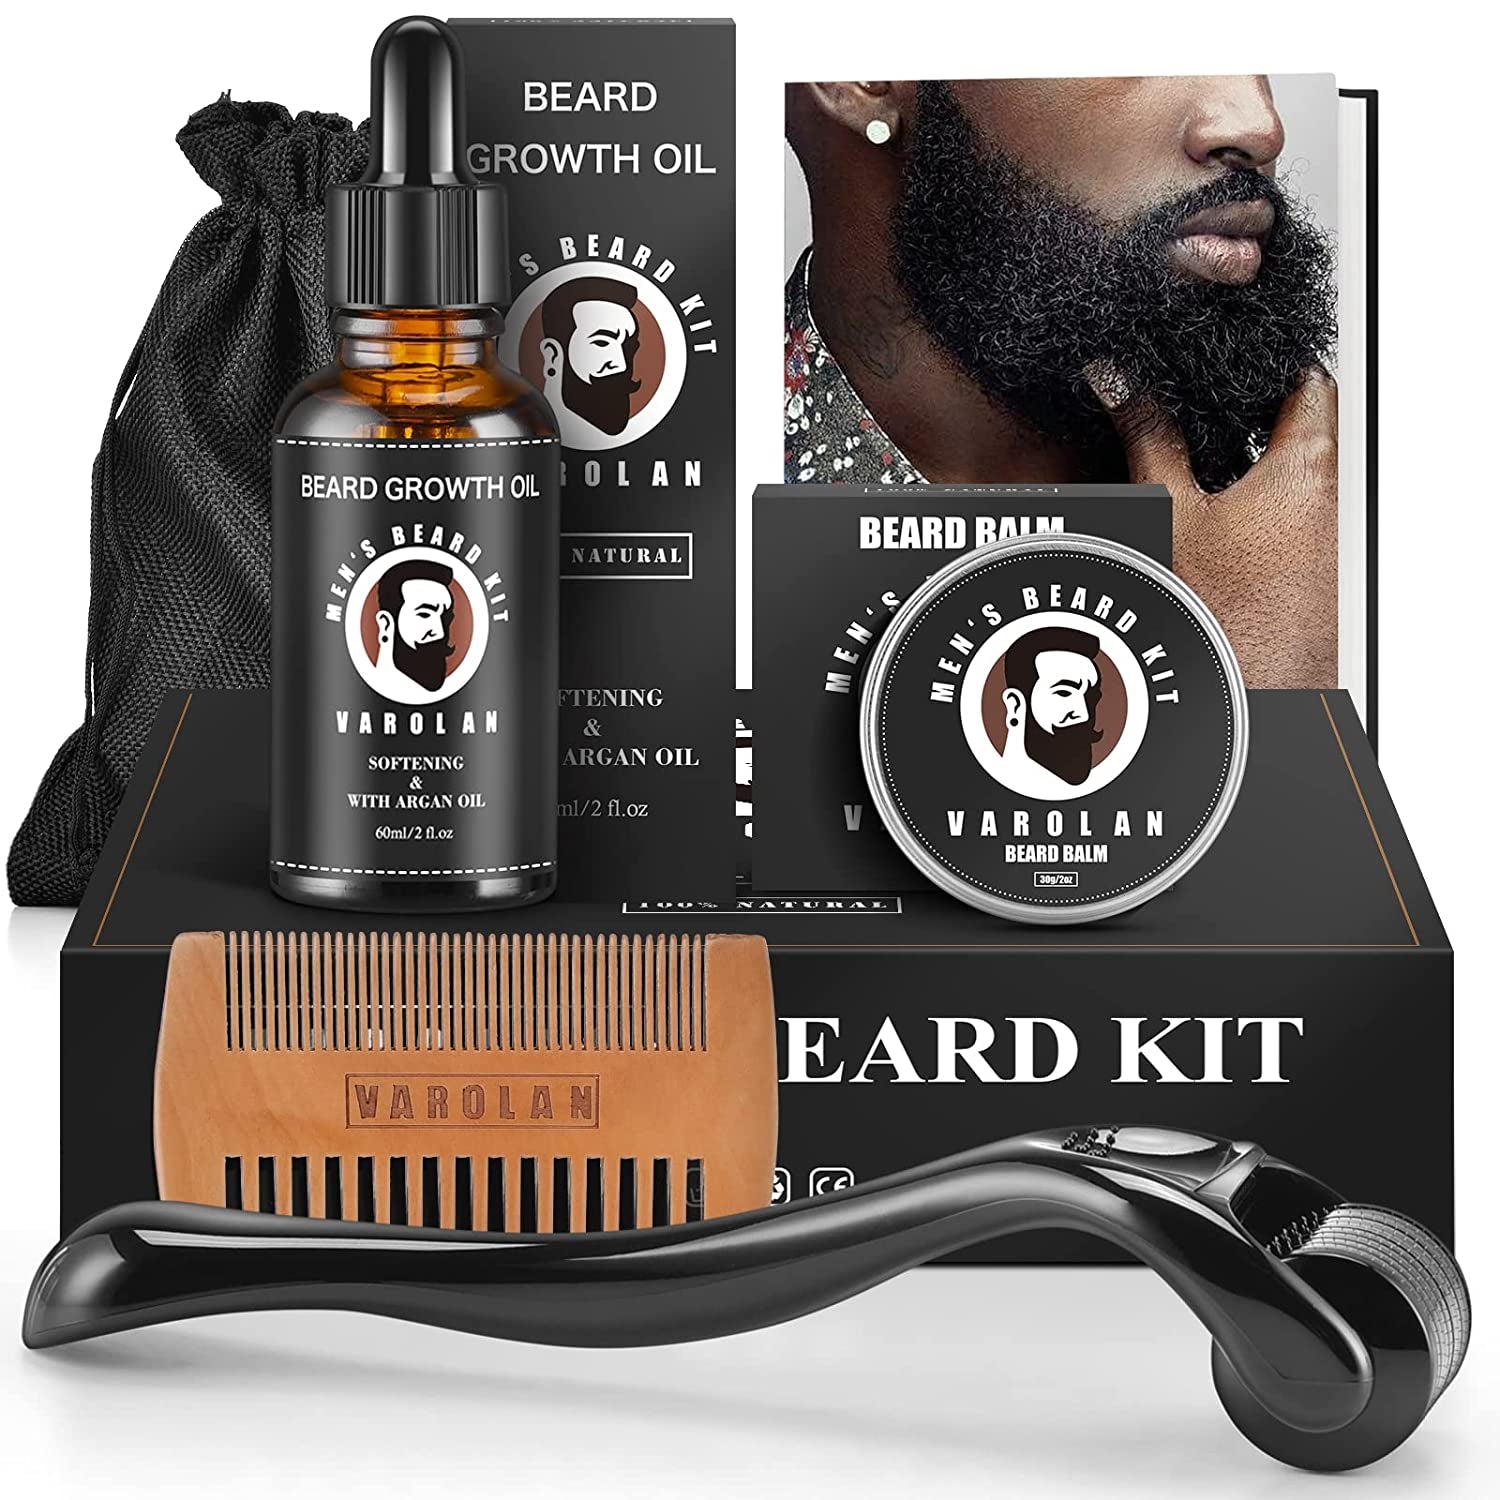 Beard Growth Kit - Beard Derma Roller, Beard Growth Oil (2Oz), Beard Balm, Beard Comb, Beard Ebook, Storage Bag, Beard Kit, Mustache Mens Gifts Set for Boyfriend Husband Fathers Dad Him